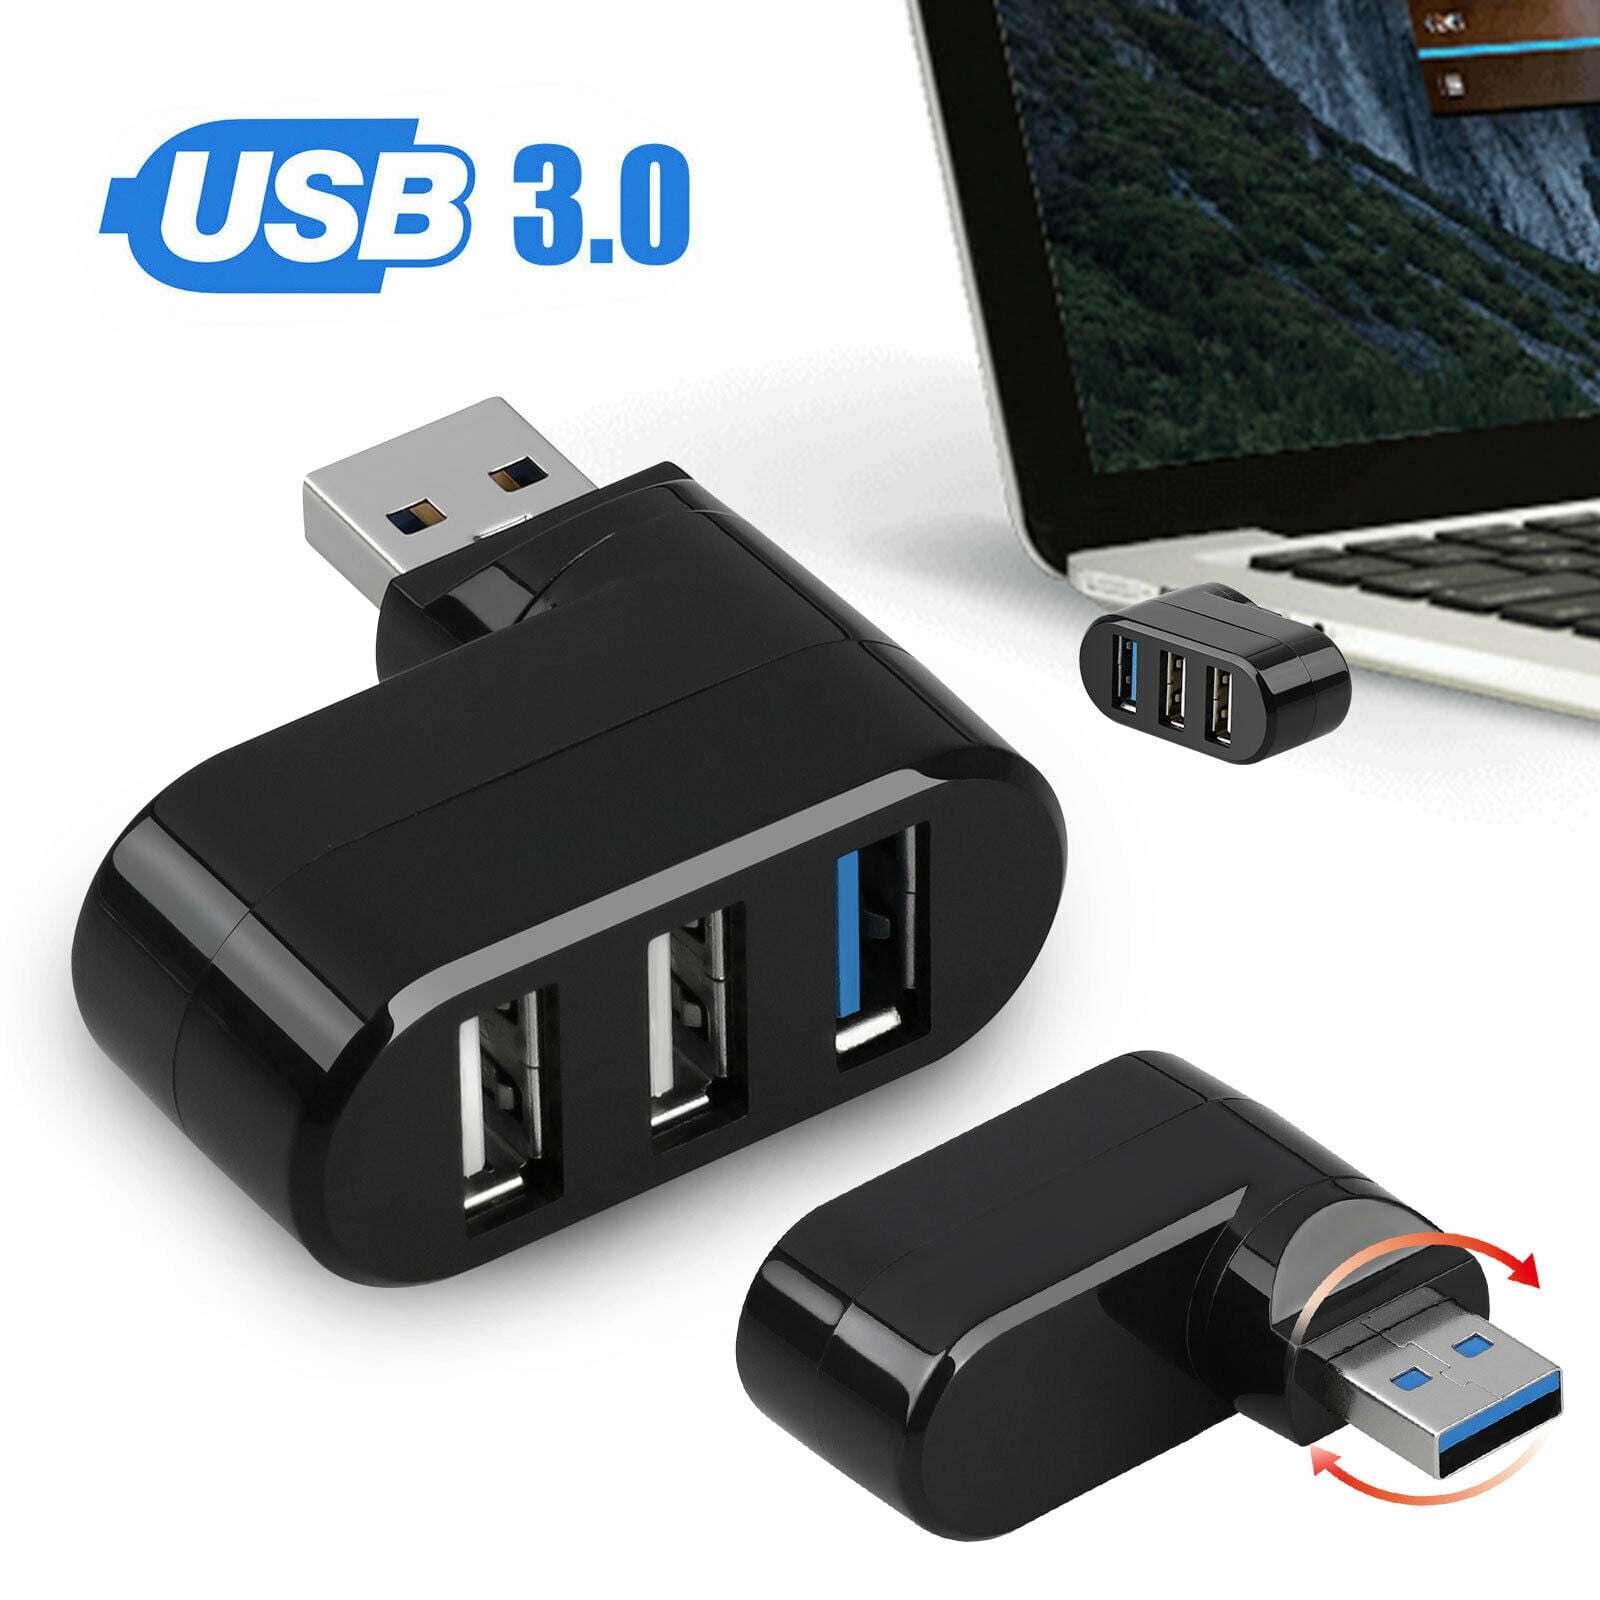 Mini USB Hub Extensions, 3 USB Hub Expander, 2.0 Hub, USB Adapter Station, Ultra Slim Portable Data Hub - Walmart.com